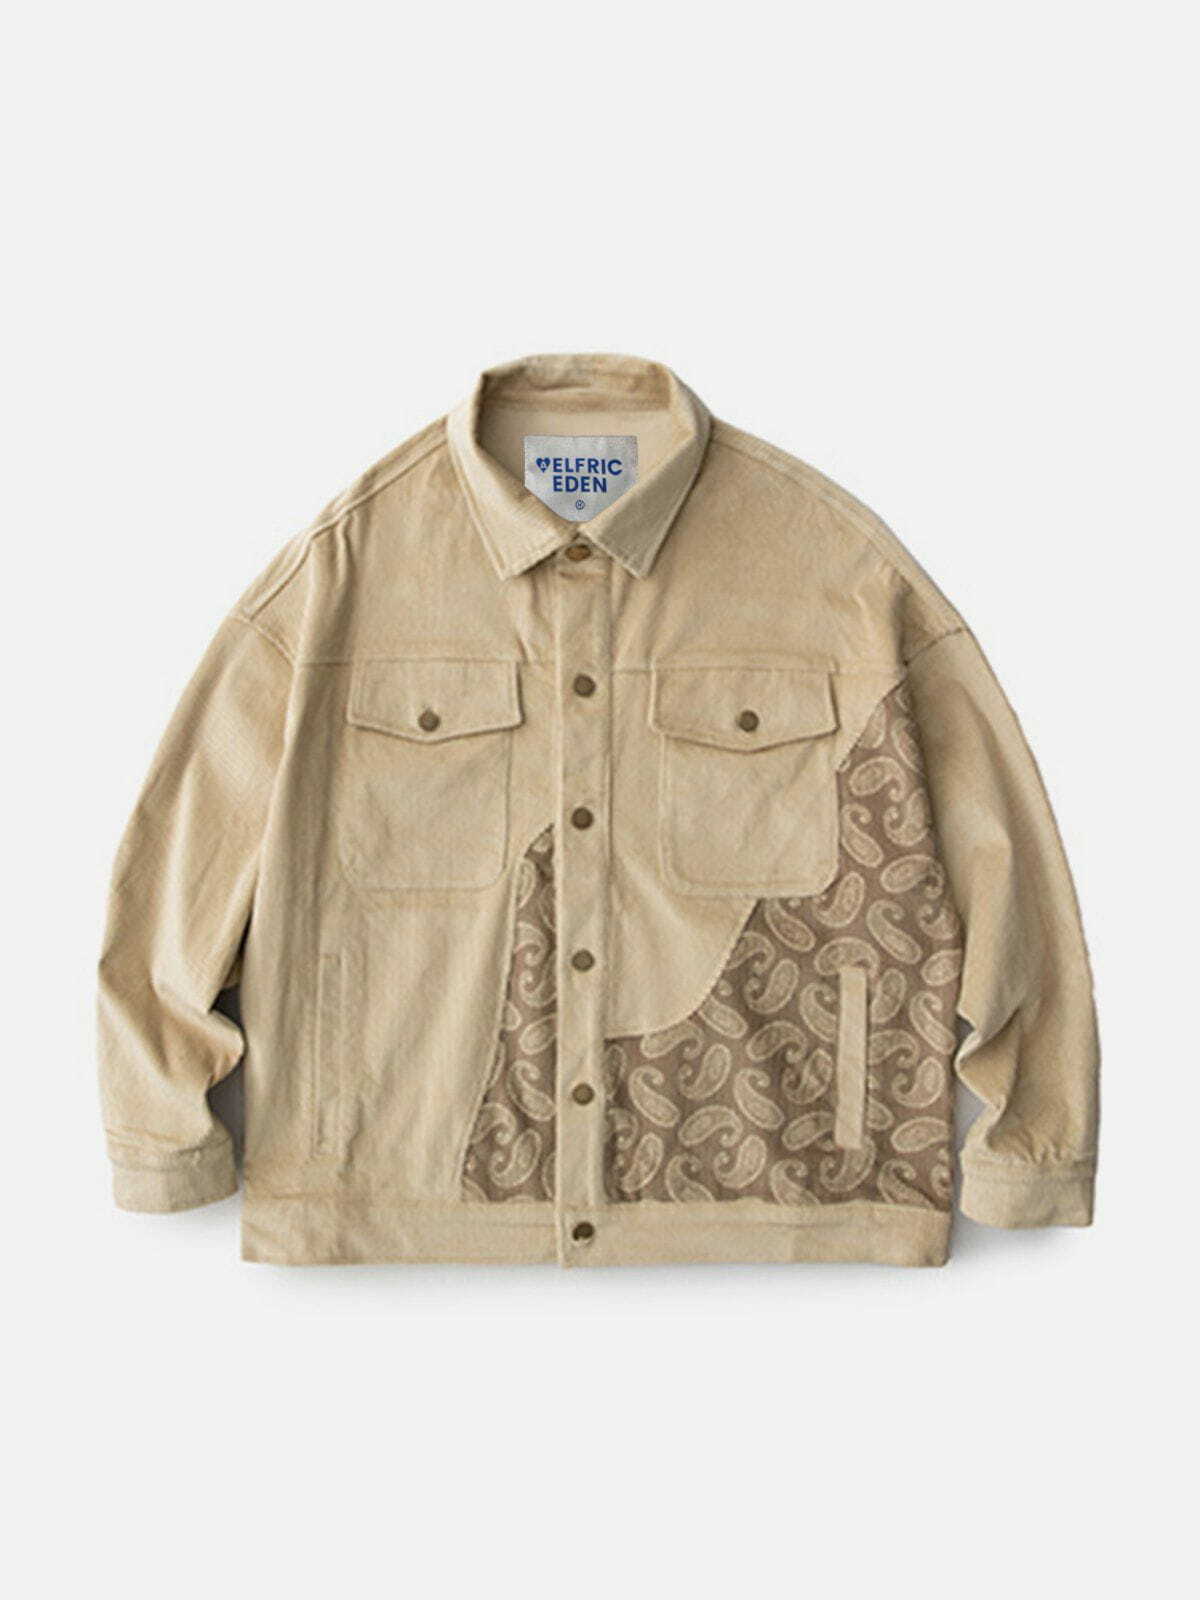 edgy irregular patchwork jacket urban & trendy appeal 4007